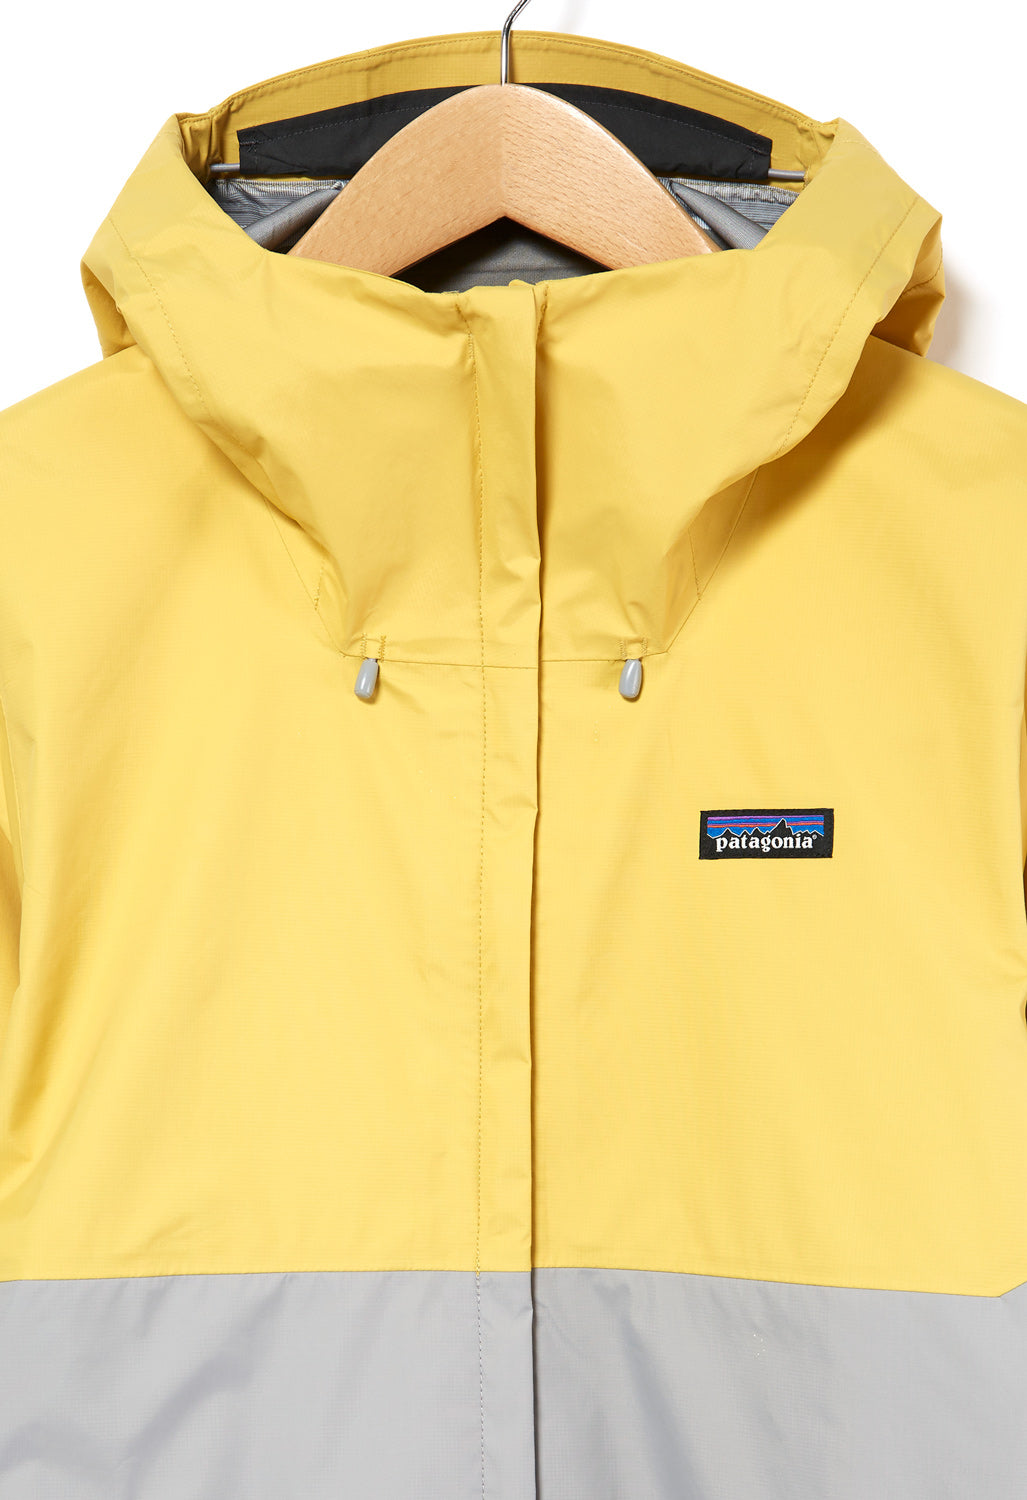 Patagonia Men's Torrentshell 3L Jacket - Surfboard Yellow